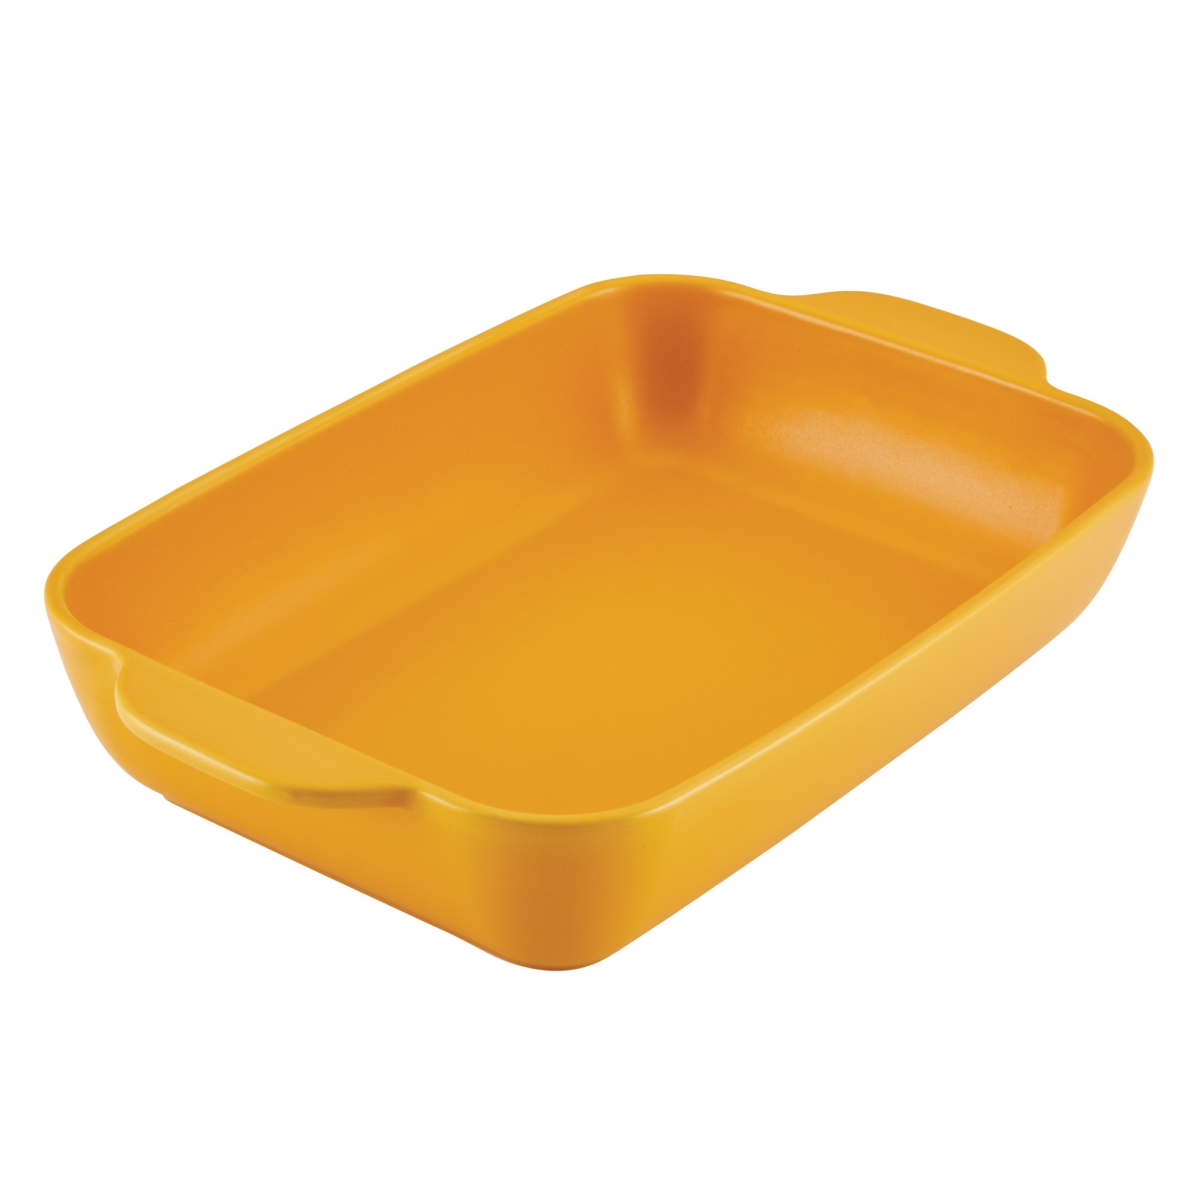 Picture of Ayesha Curry 48595 9 x 13 in. Rectangular Ceramic Baking Dish, Mustard Yellow